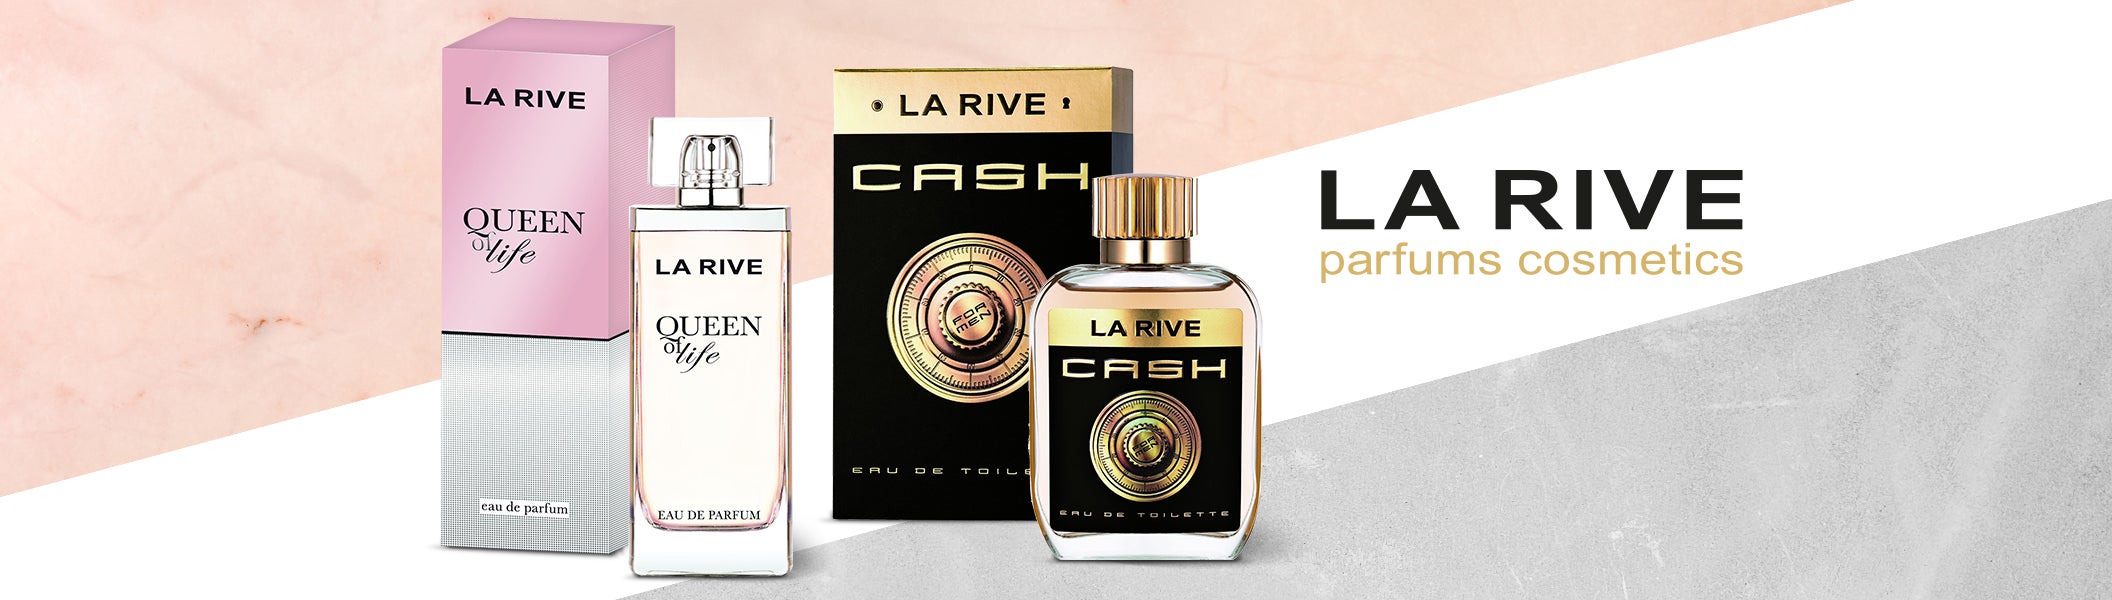 LA RIVE parfume (fast lavpris) | Køb online hos rossmann.dk »